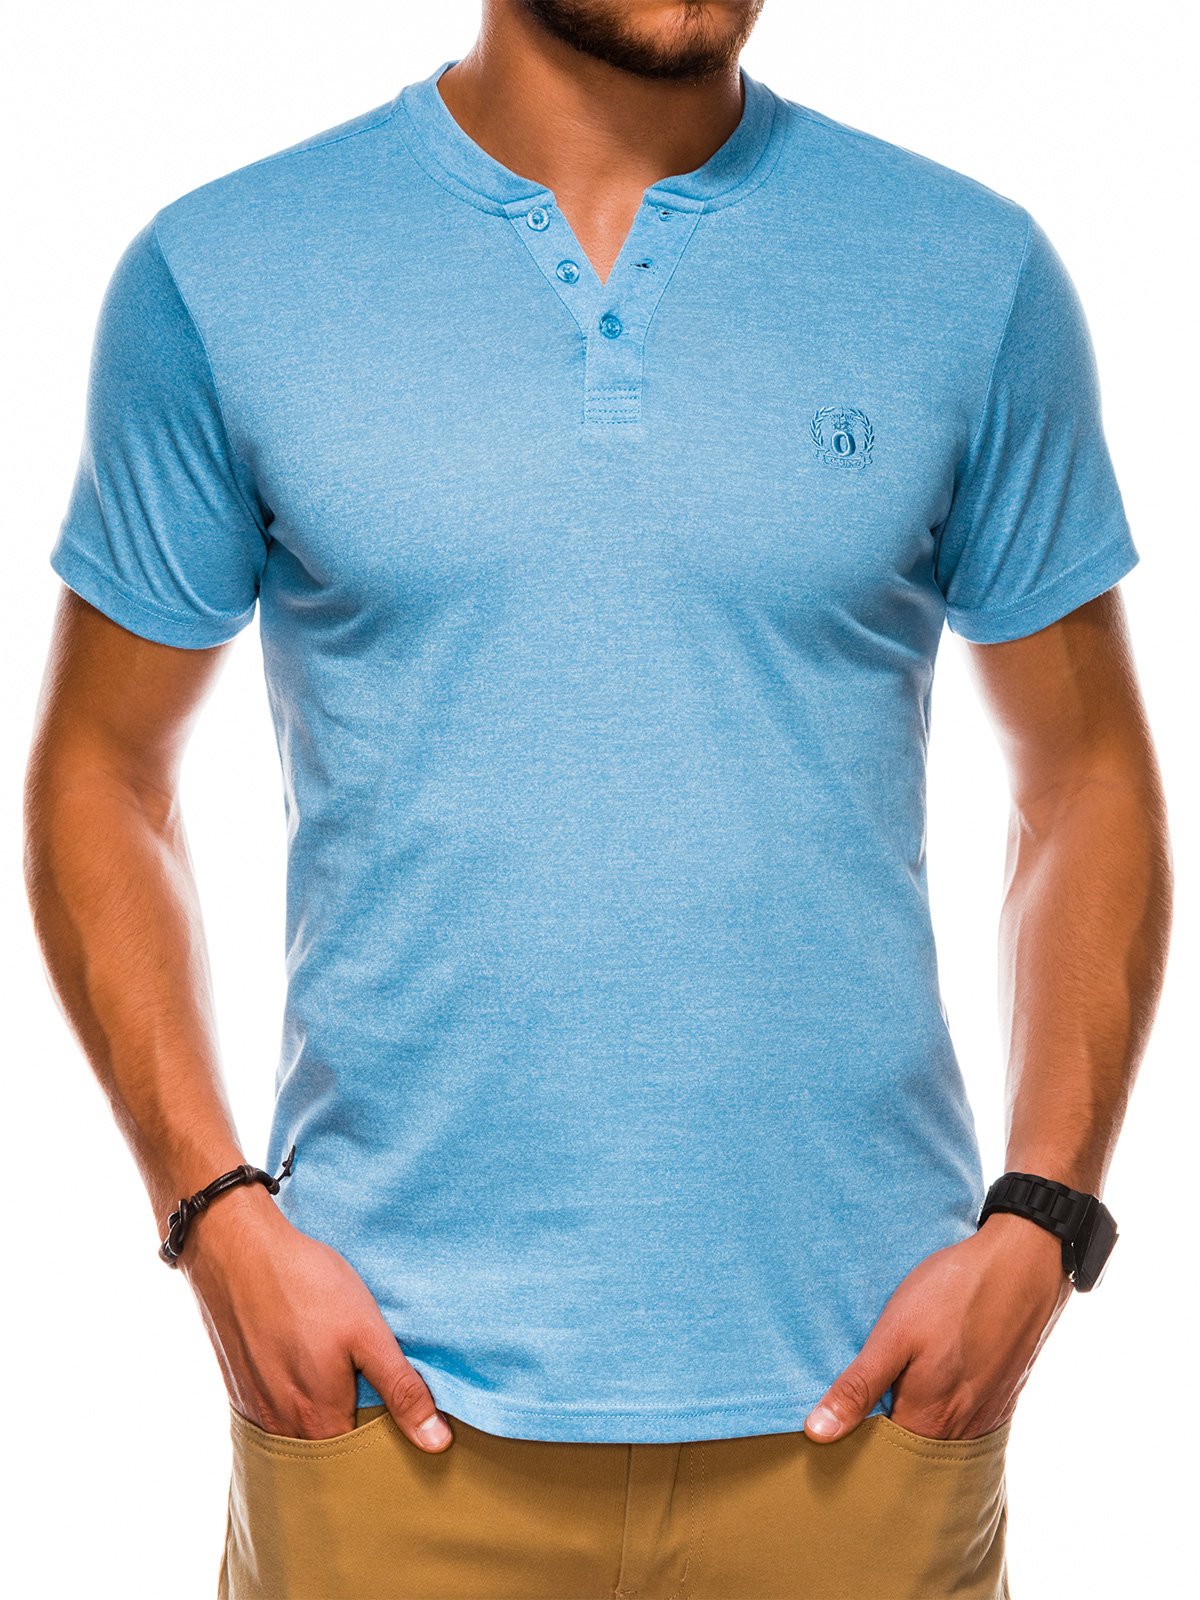 Men's plain t-shirt S1047 - light blue | MODONE wholesale - Clothing ...